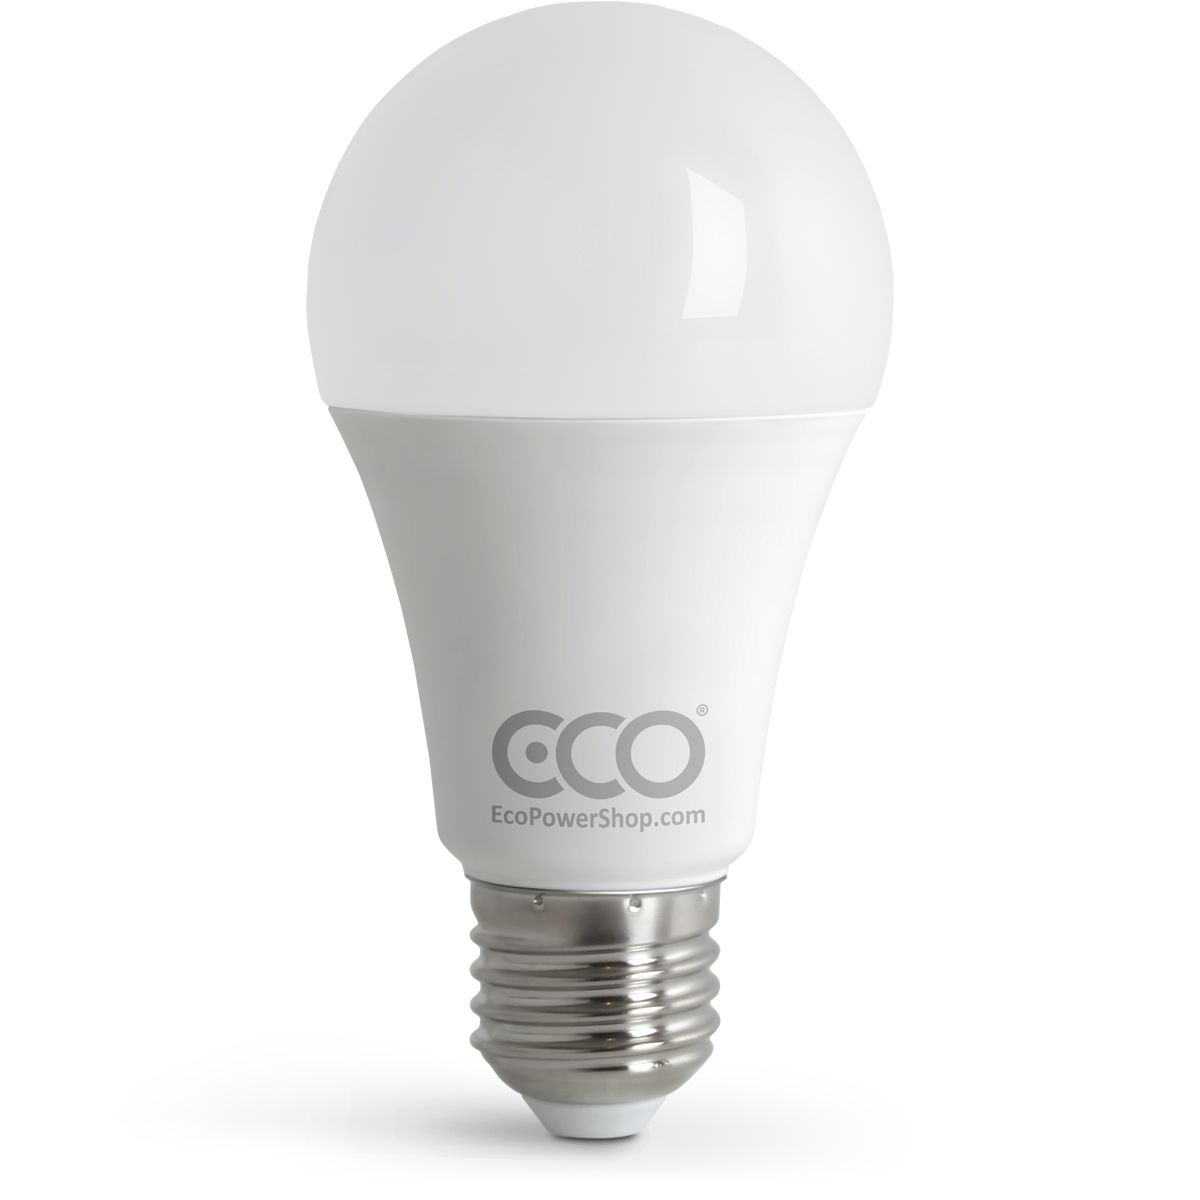 The ECO range of Saving LED light bulbs from EcoPowerShop the latest energy saving light bulb technology.